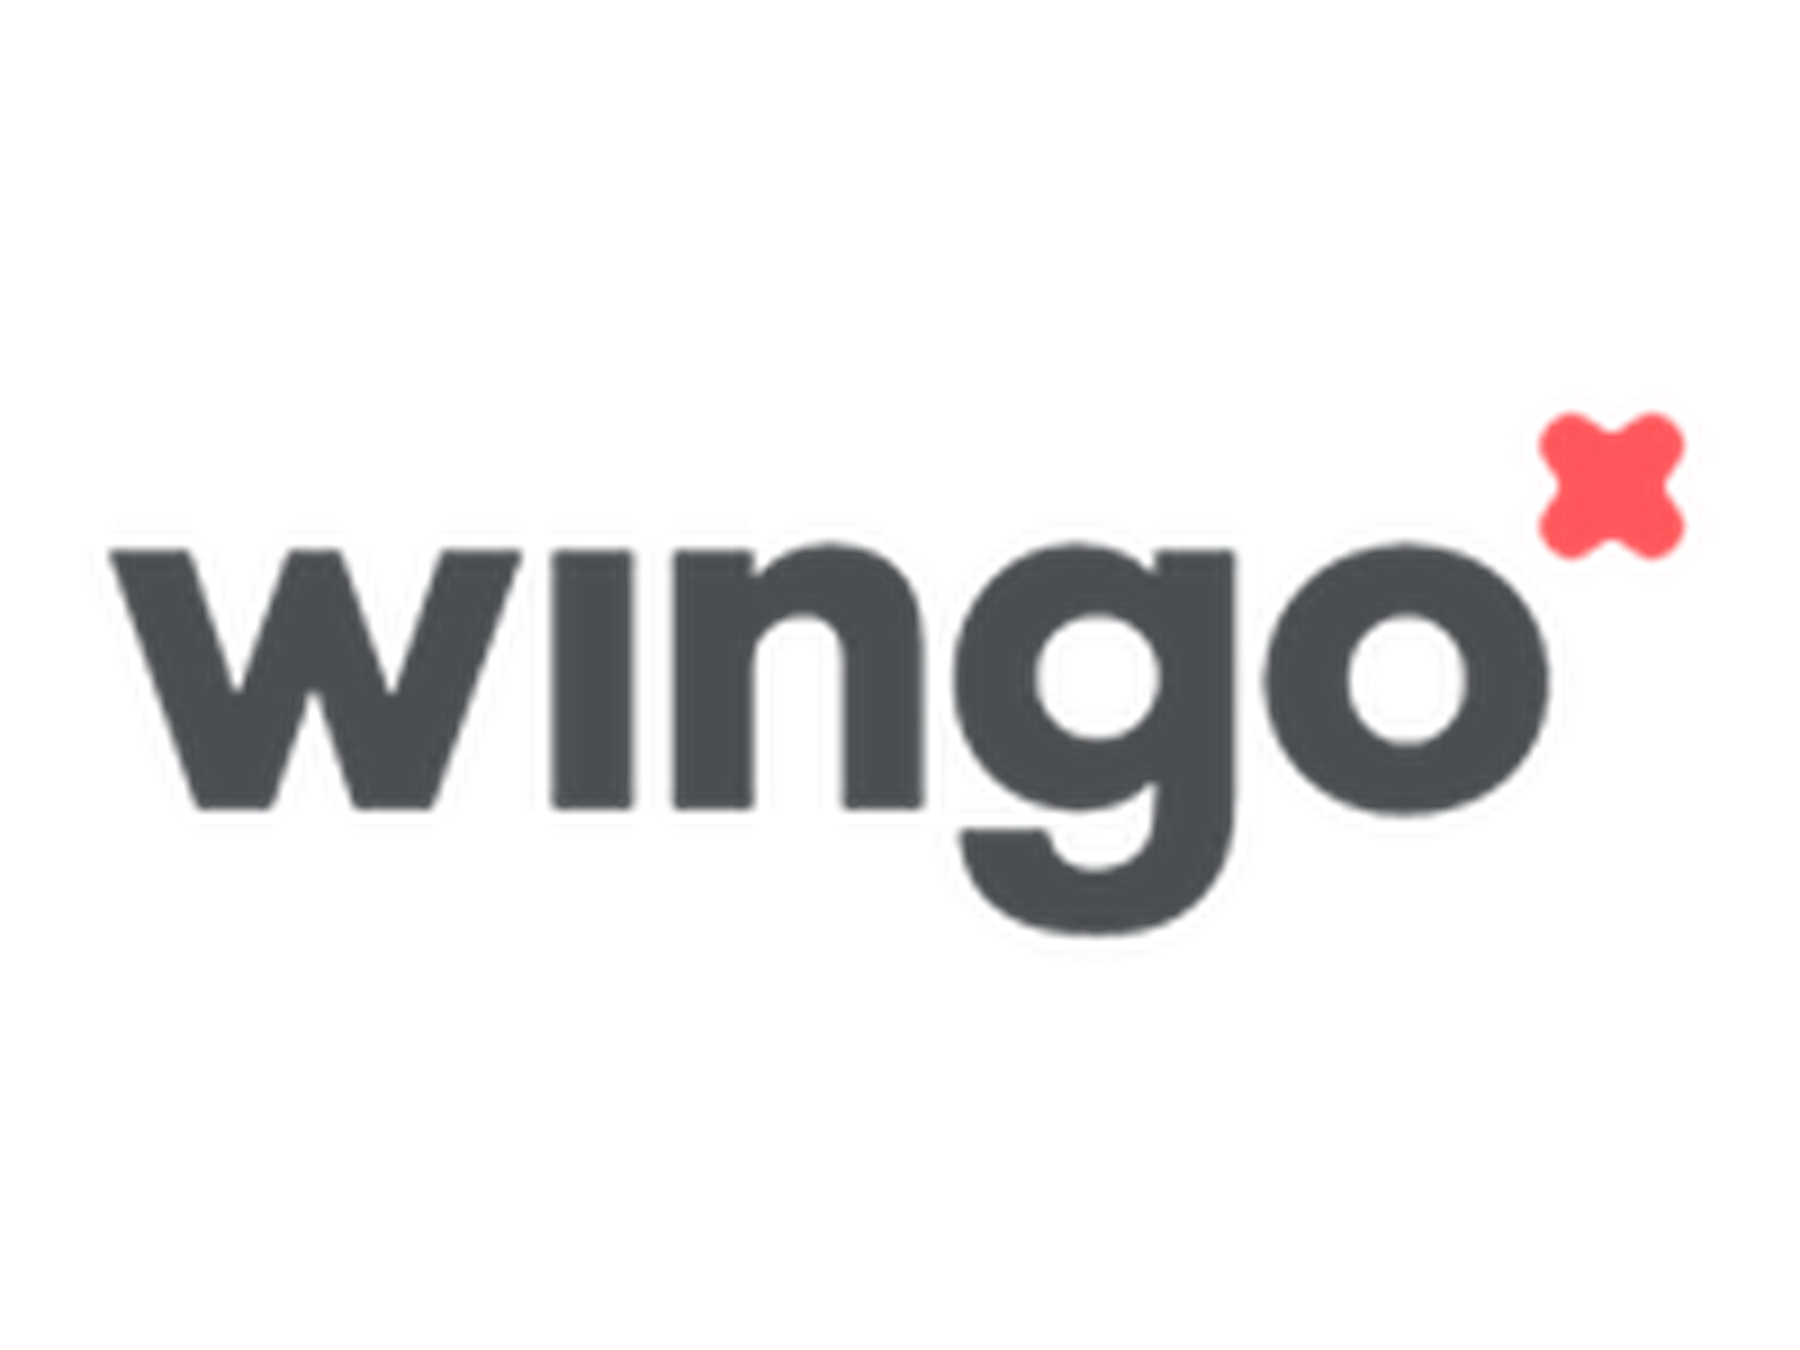 Wingo Promo Code